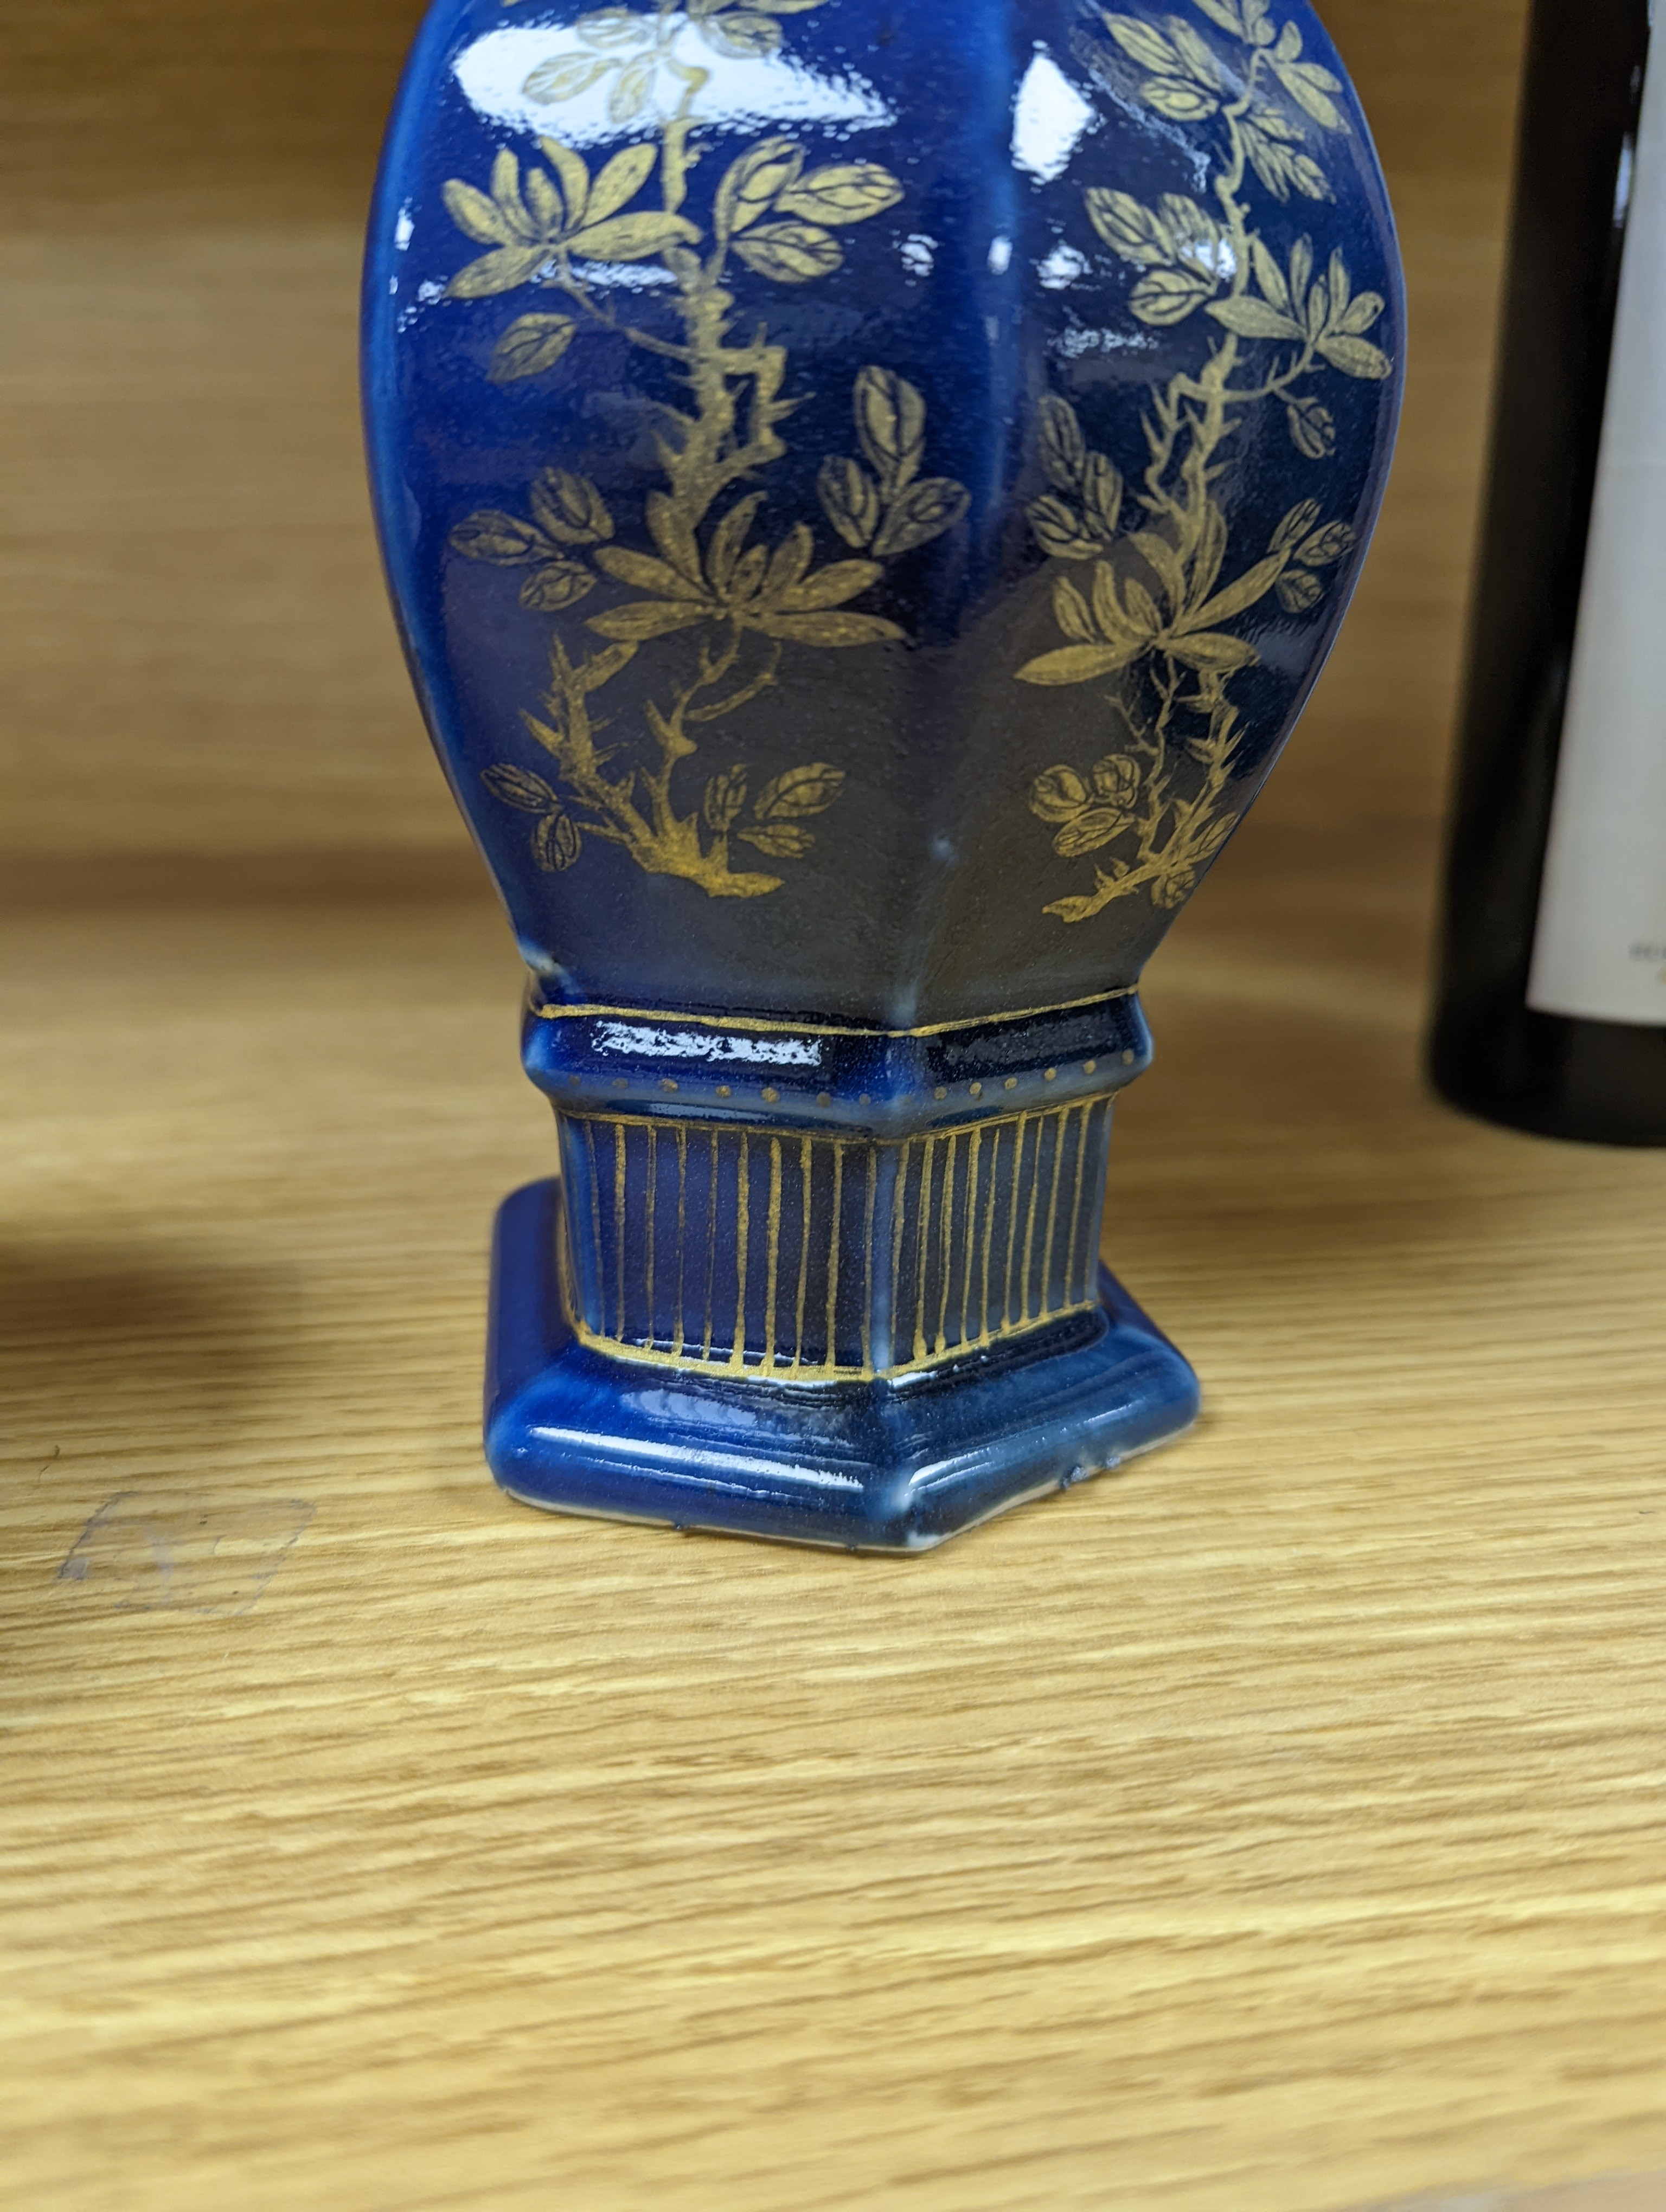 A Chinese gilded powder blue vase 26.5cm